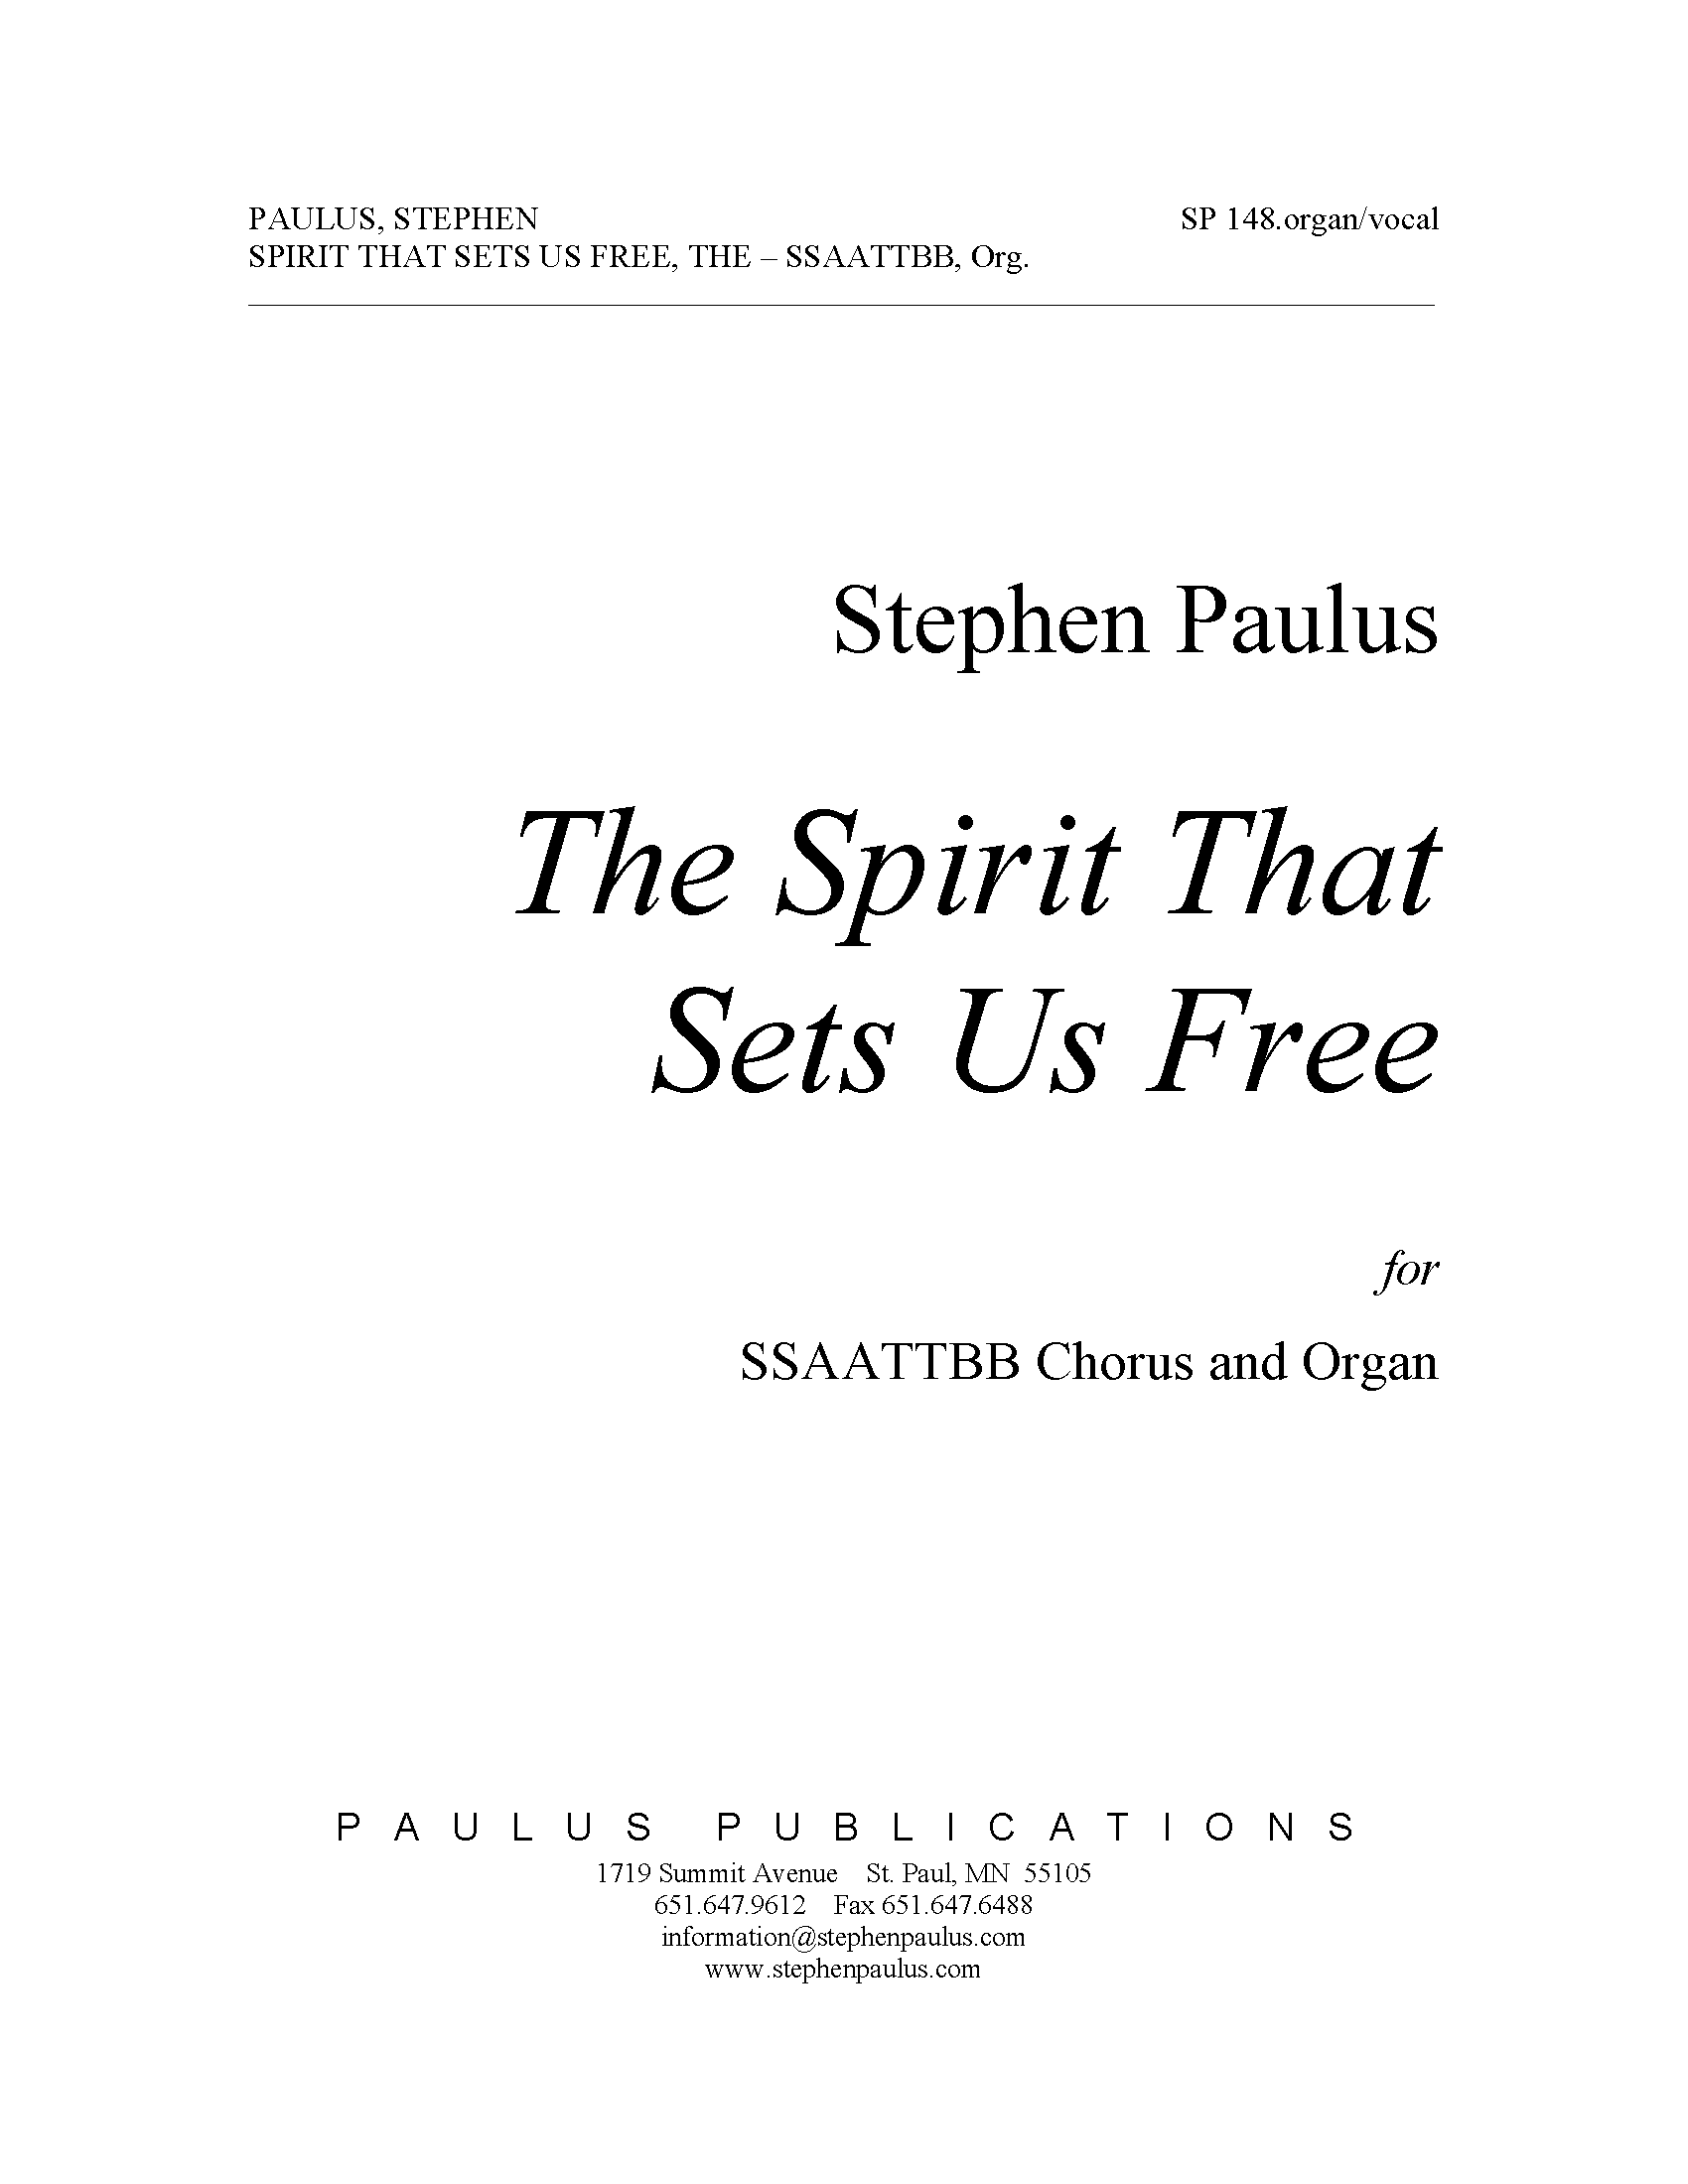 Spirit That Sets Us Free, The for SSAATTBB Chorus & Organ